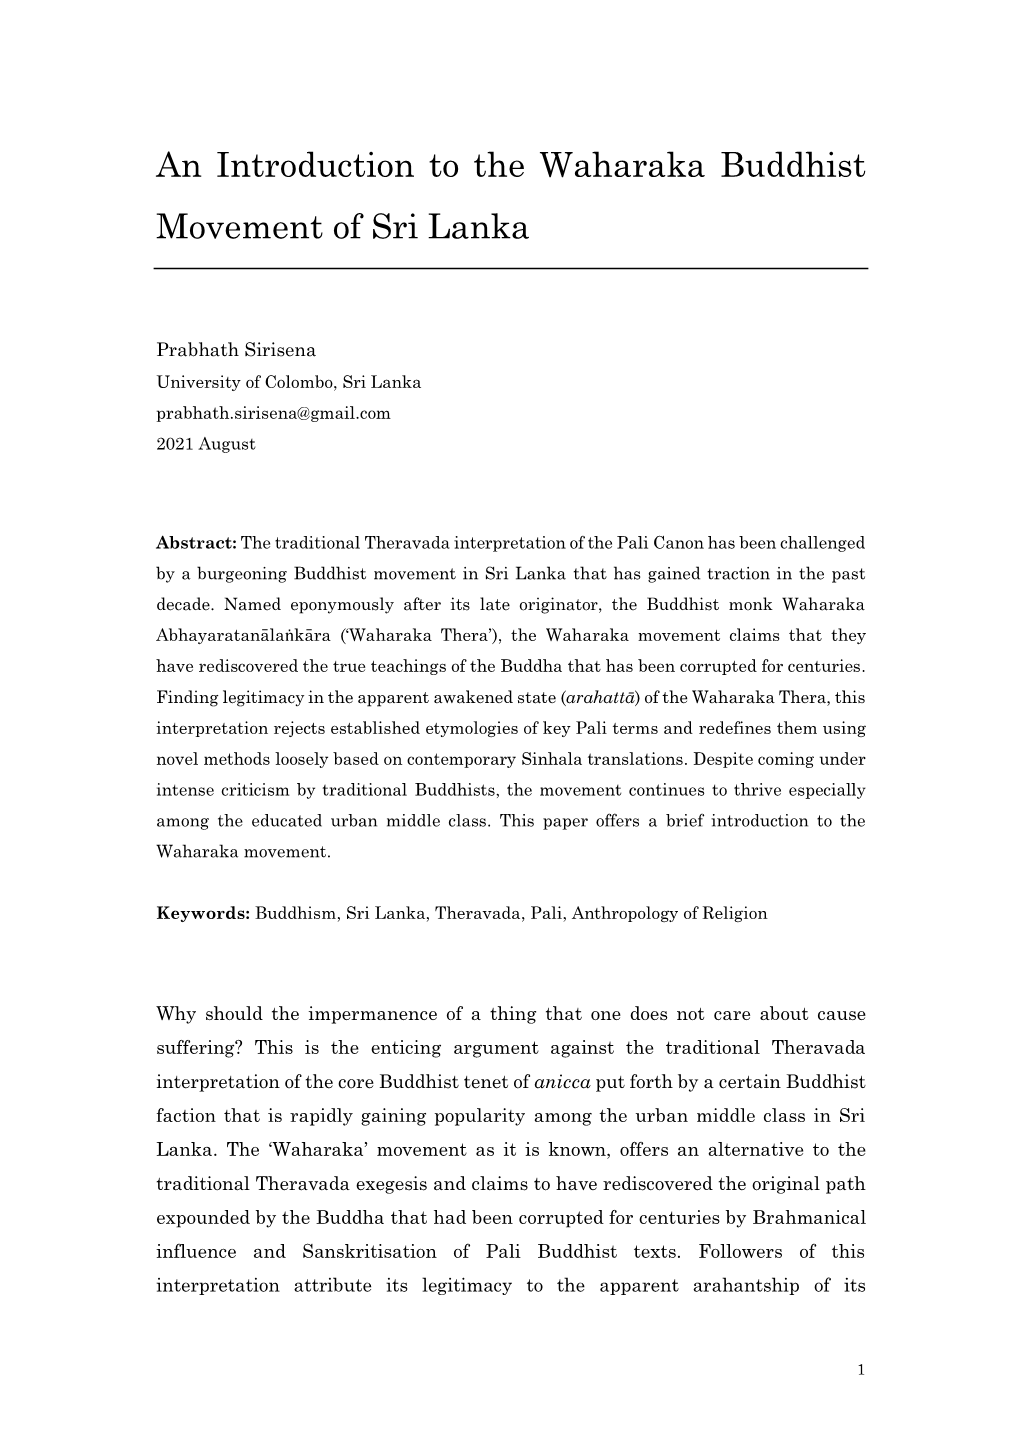 An Introduction to the Waharaka Buddhist Movement of Sri Lanka